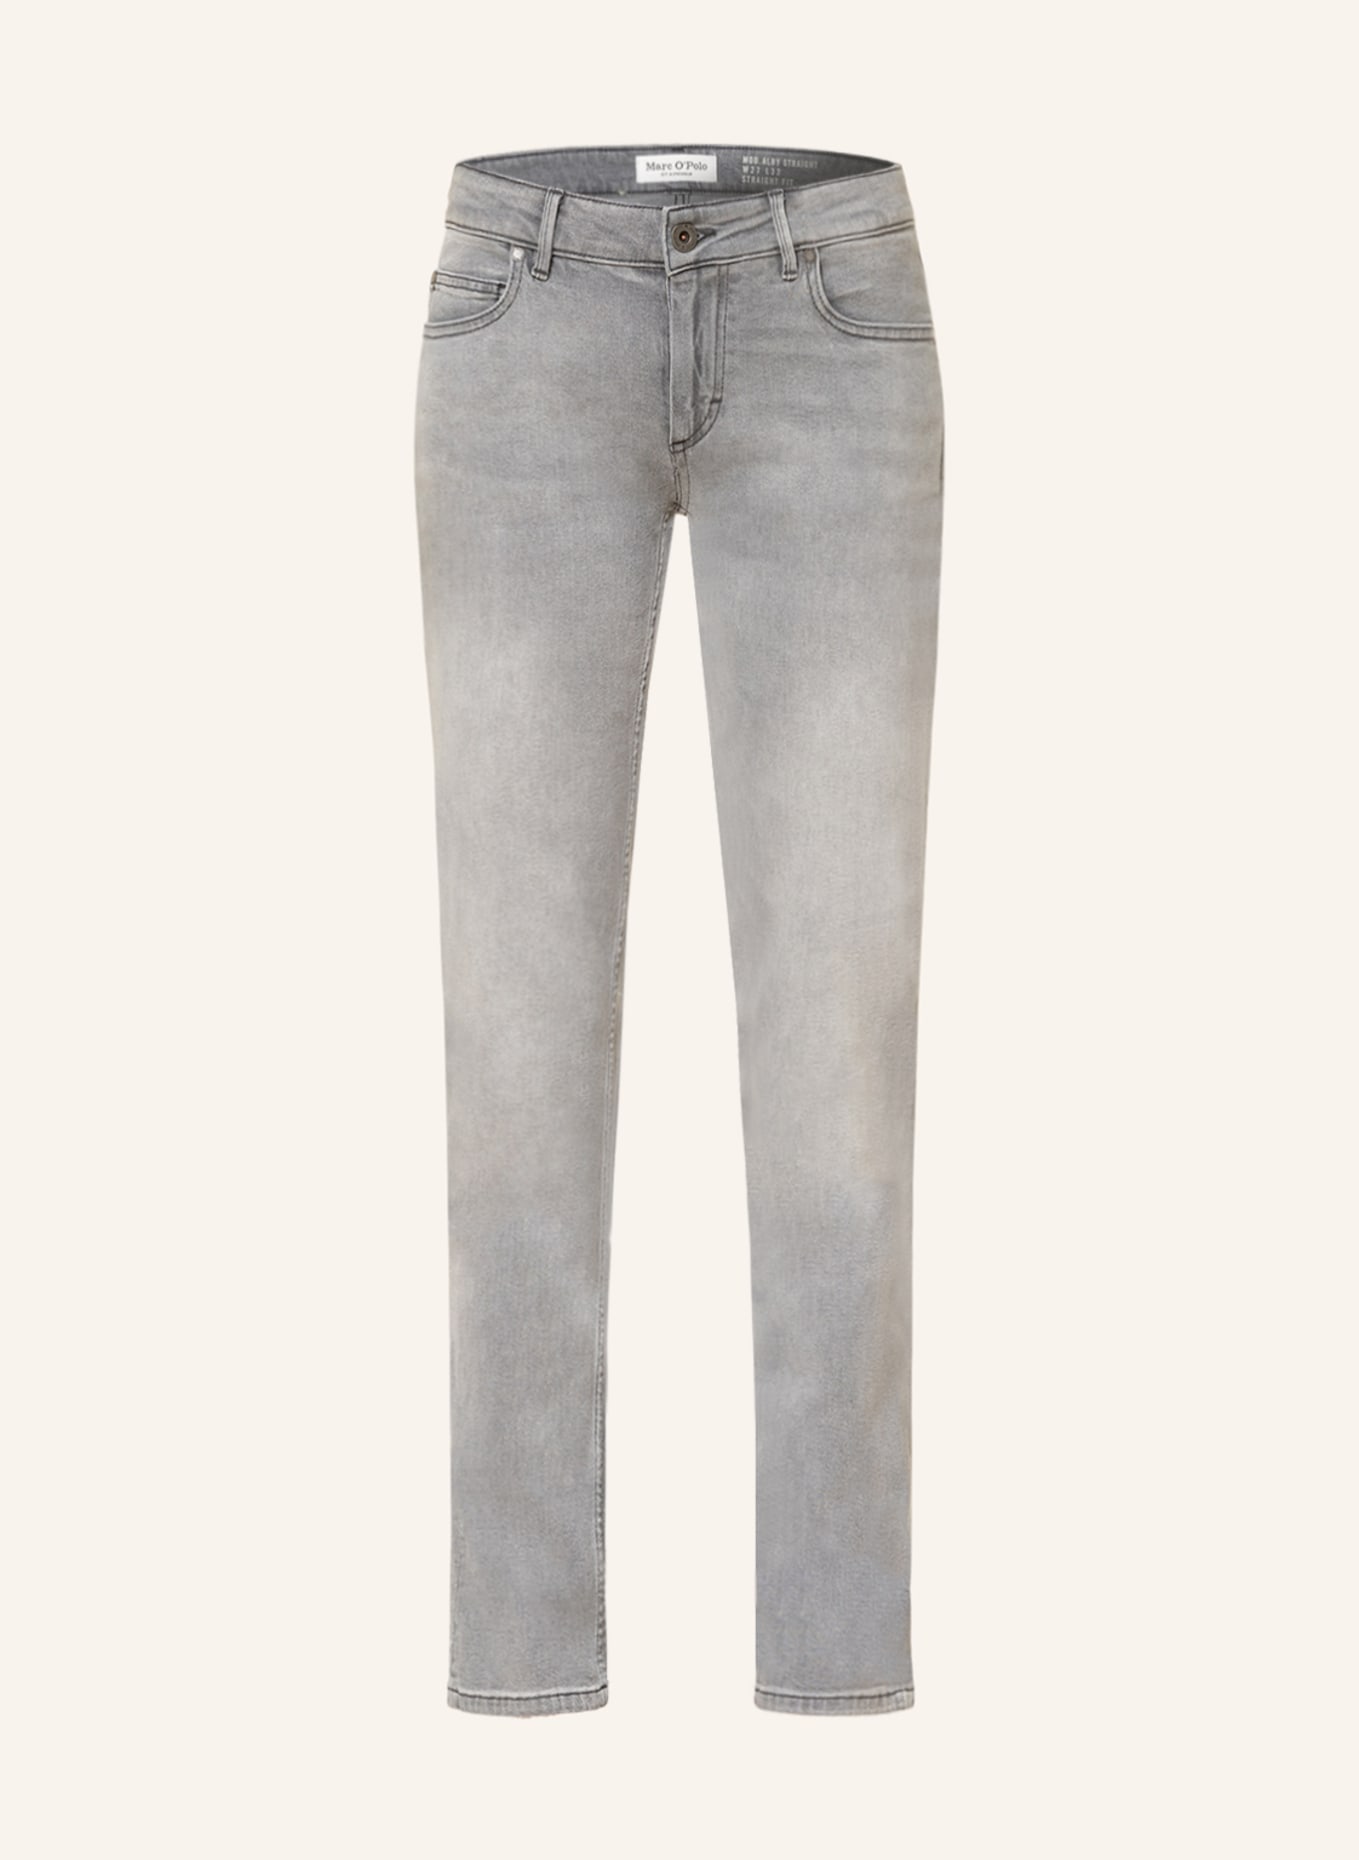 Marc O'Polo Straight Jeans, Farbe: 036 Authentic light grey wash (Bild 1)